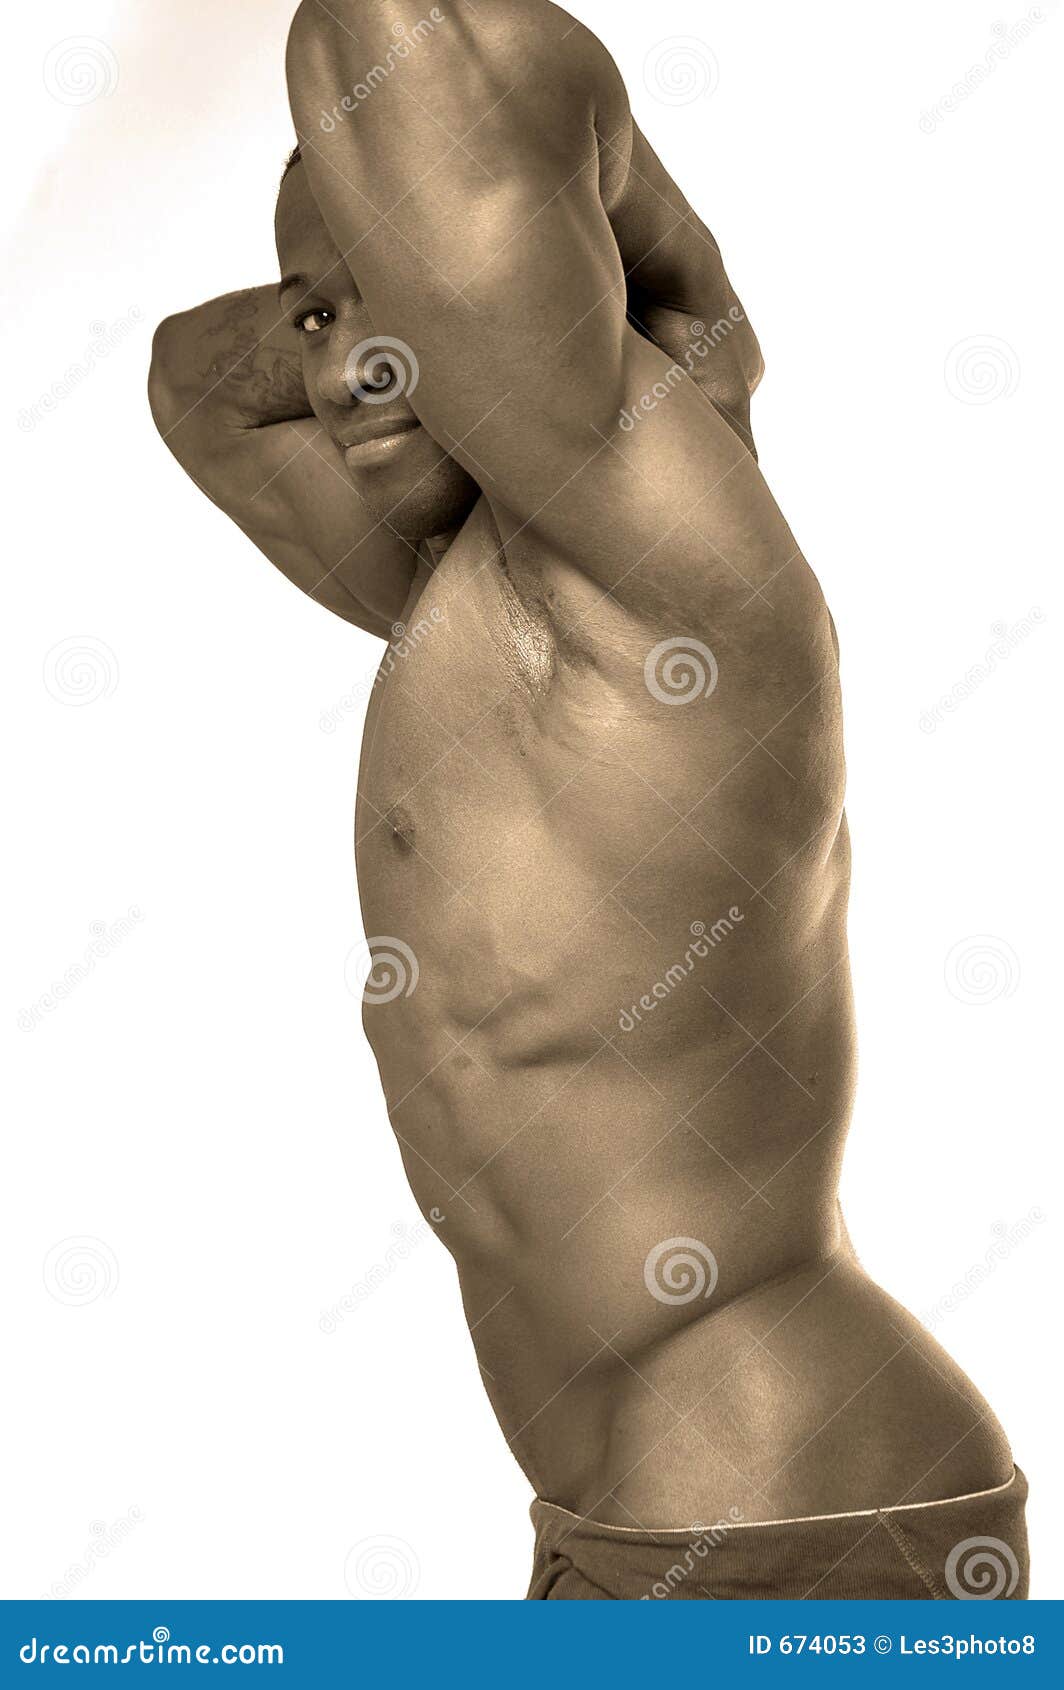 Muscle Man Stock Photos - Image: 674053